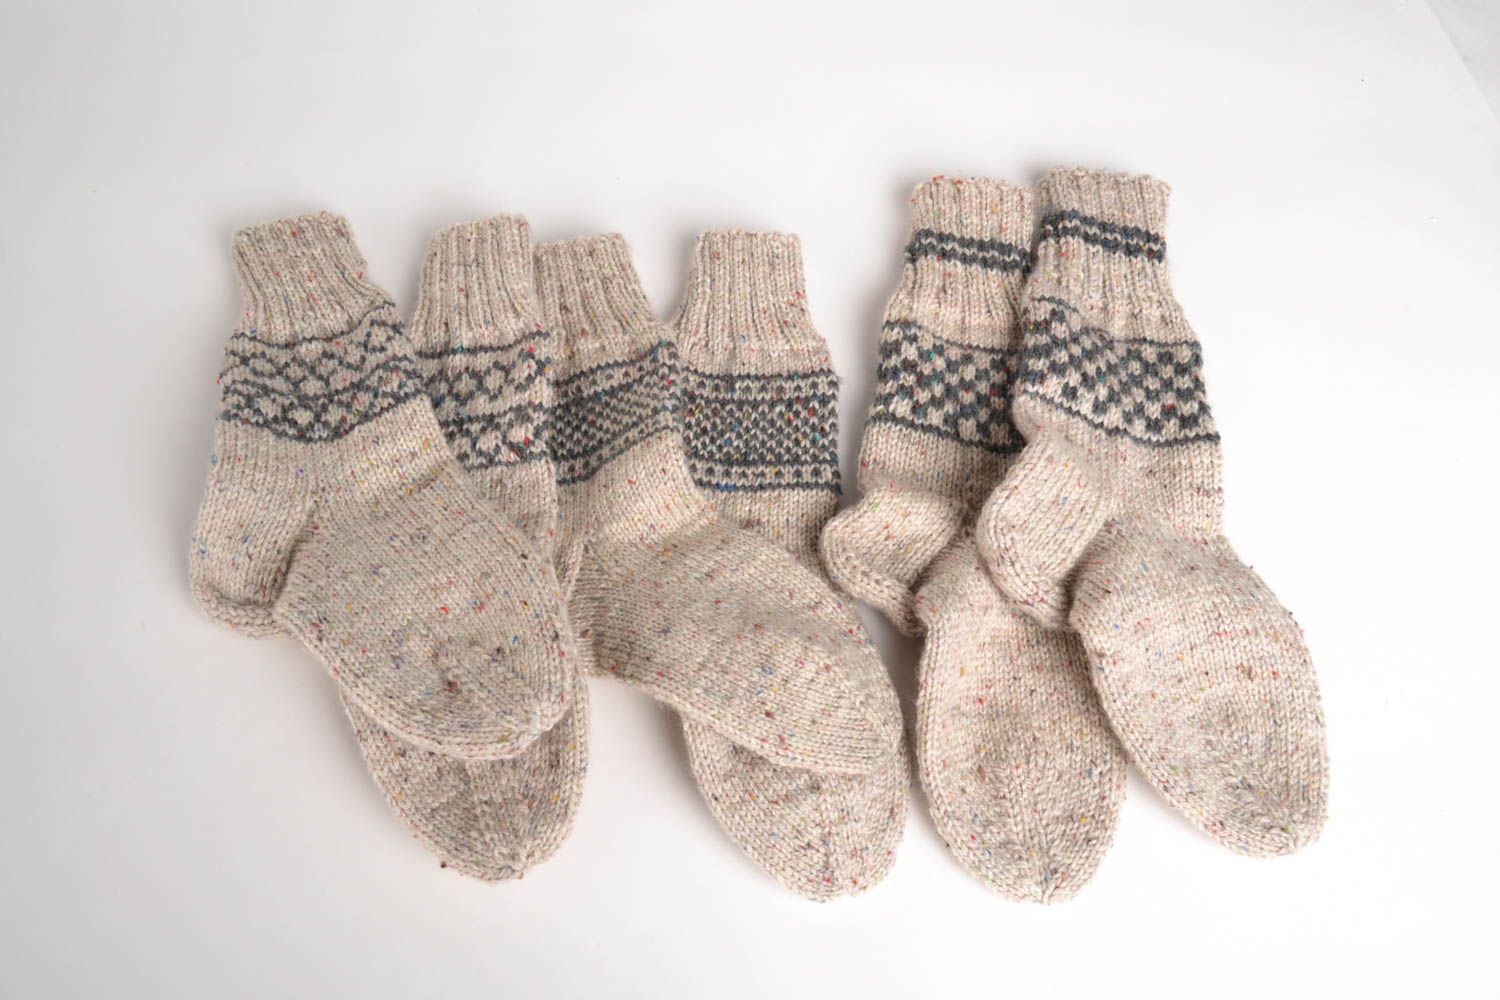 Handmade knitted socks warmest socks woolen socks winter clothes gifts for guys photo 2